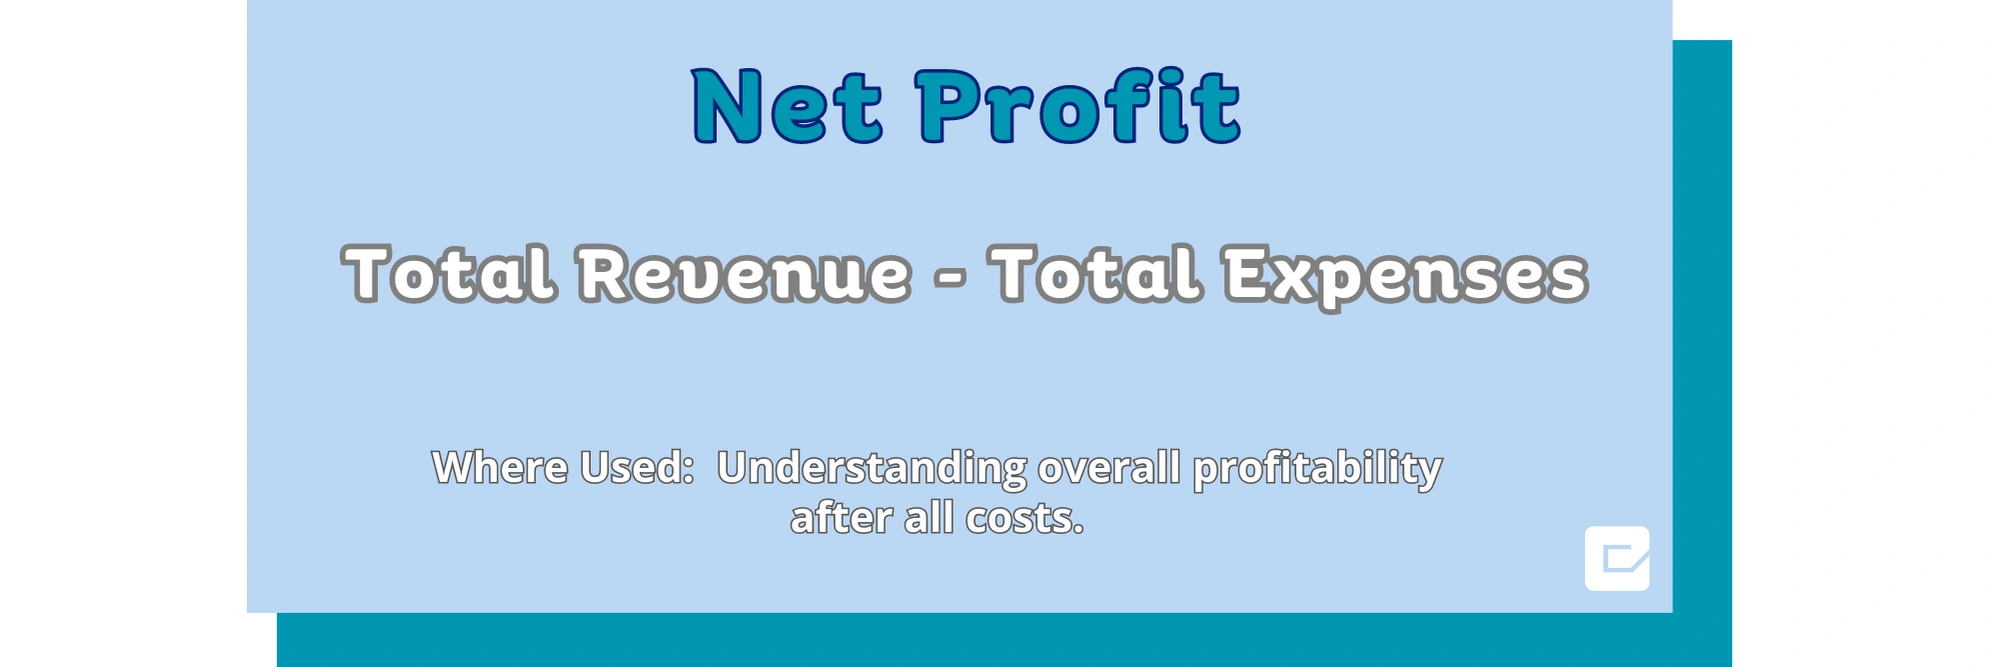 Net Profit in Amazon KPI metrics